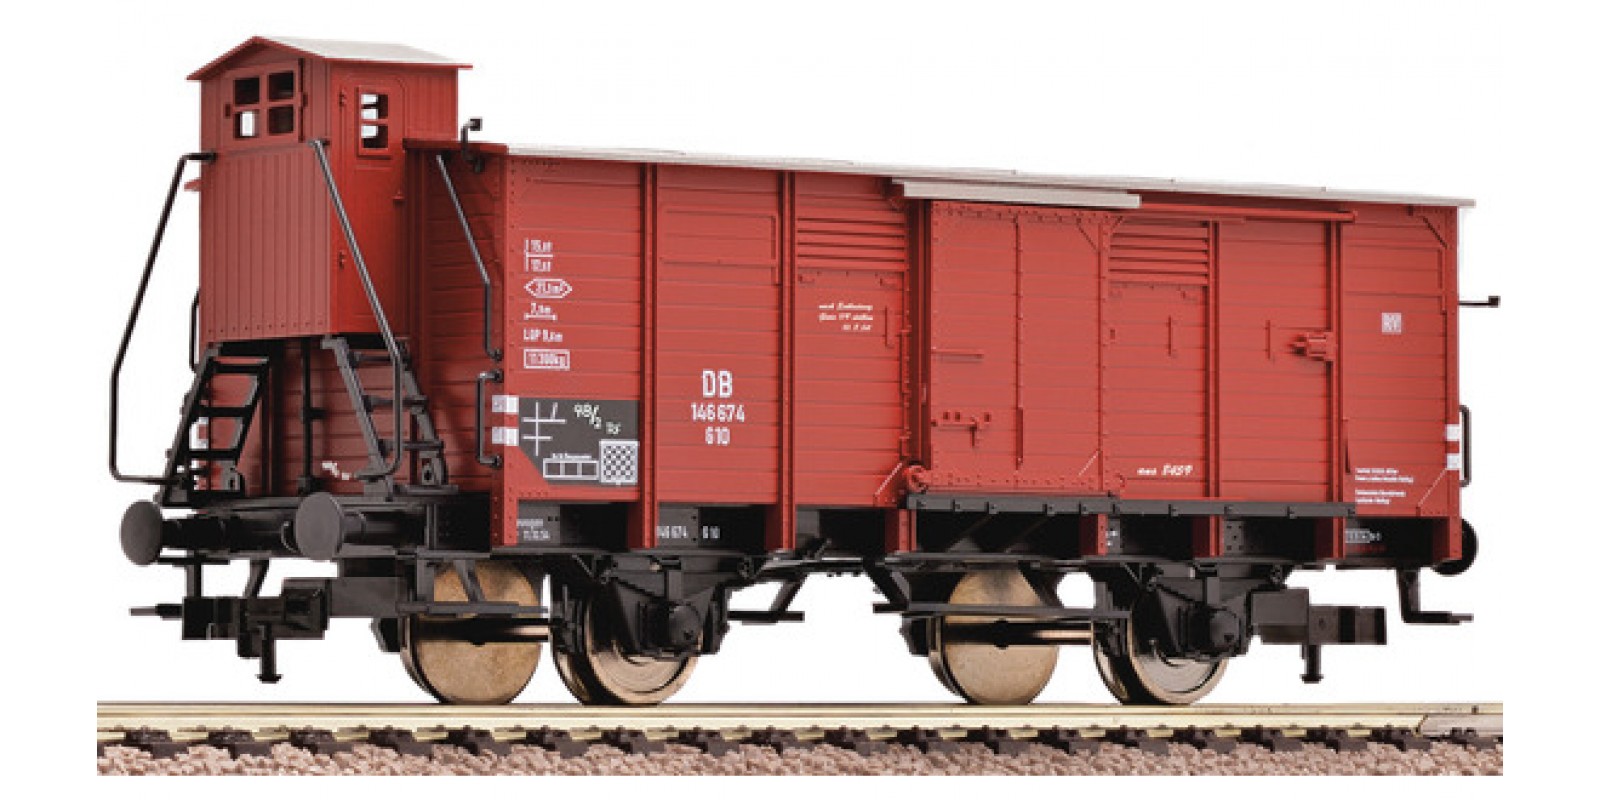 FL535811 - Boxcar type G 10, DB